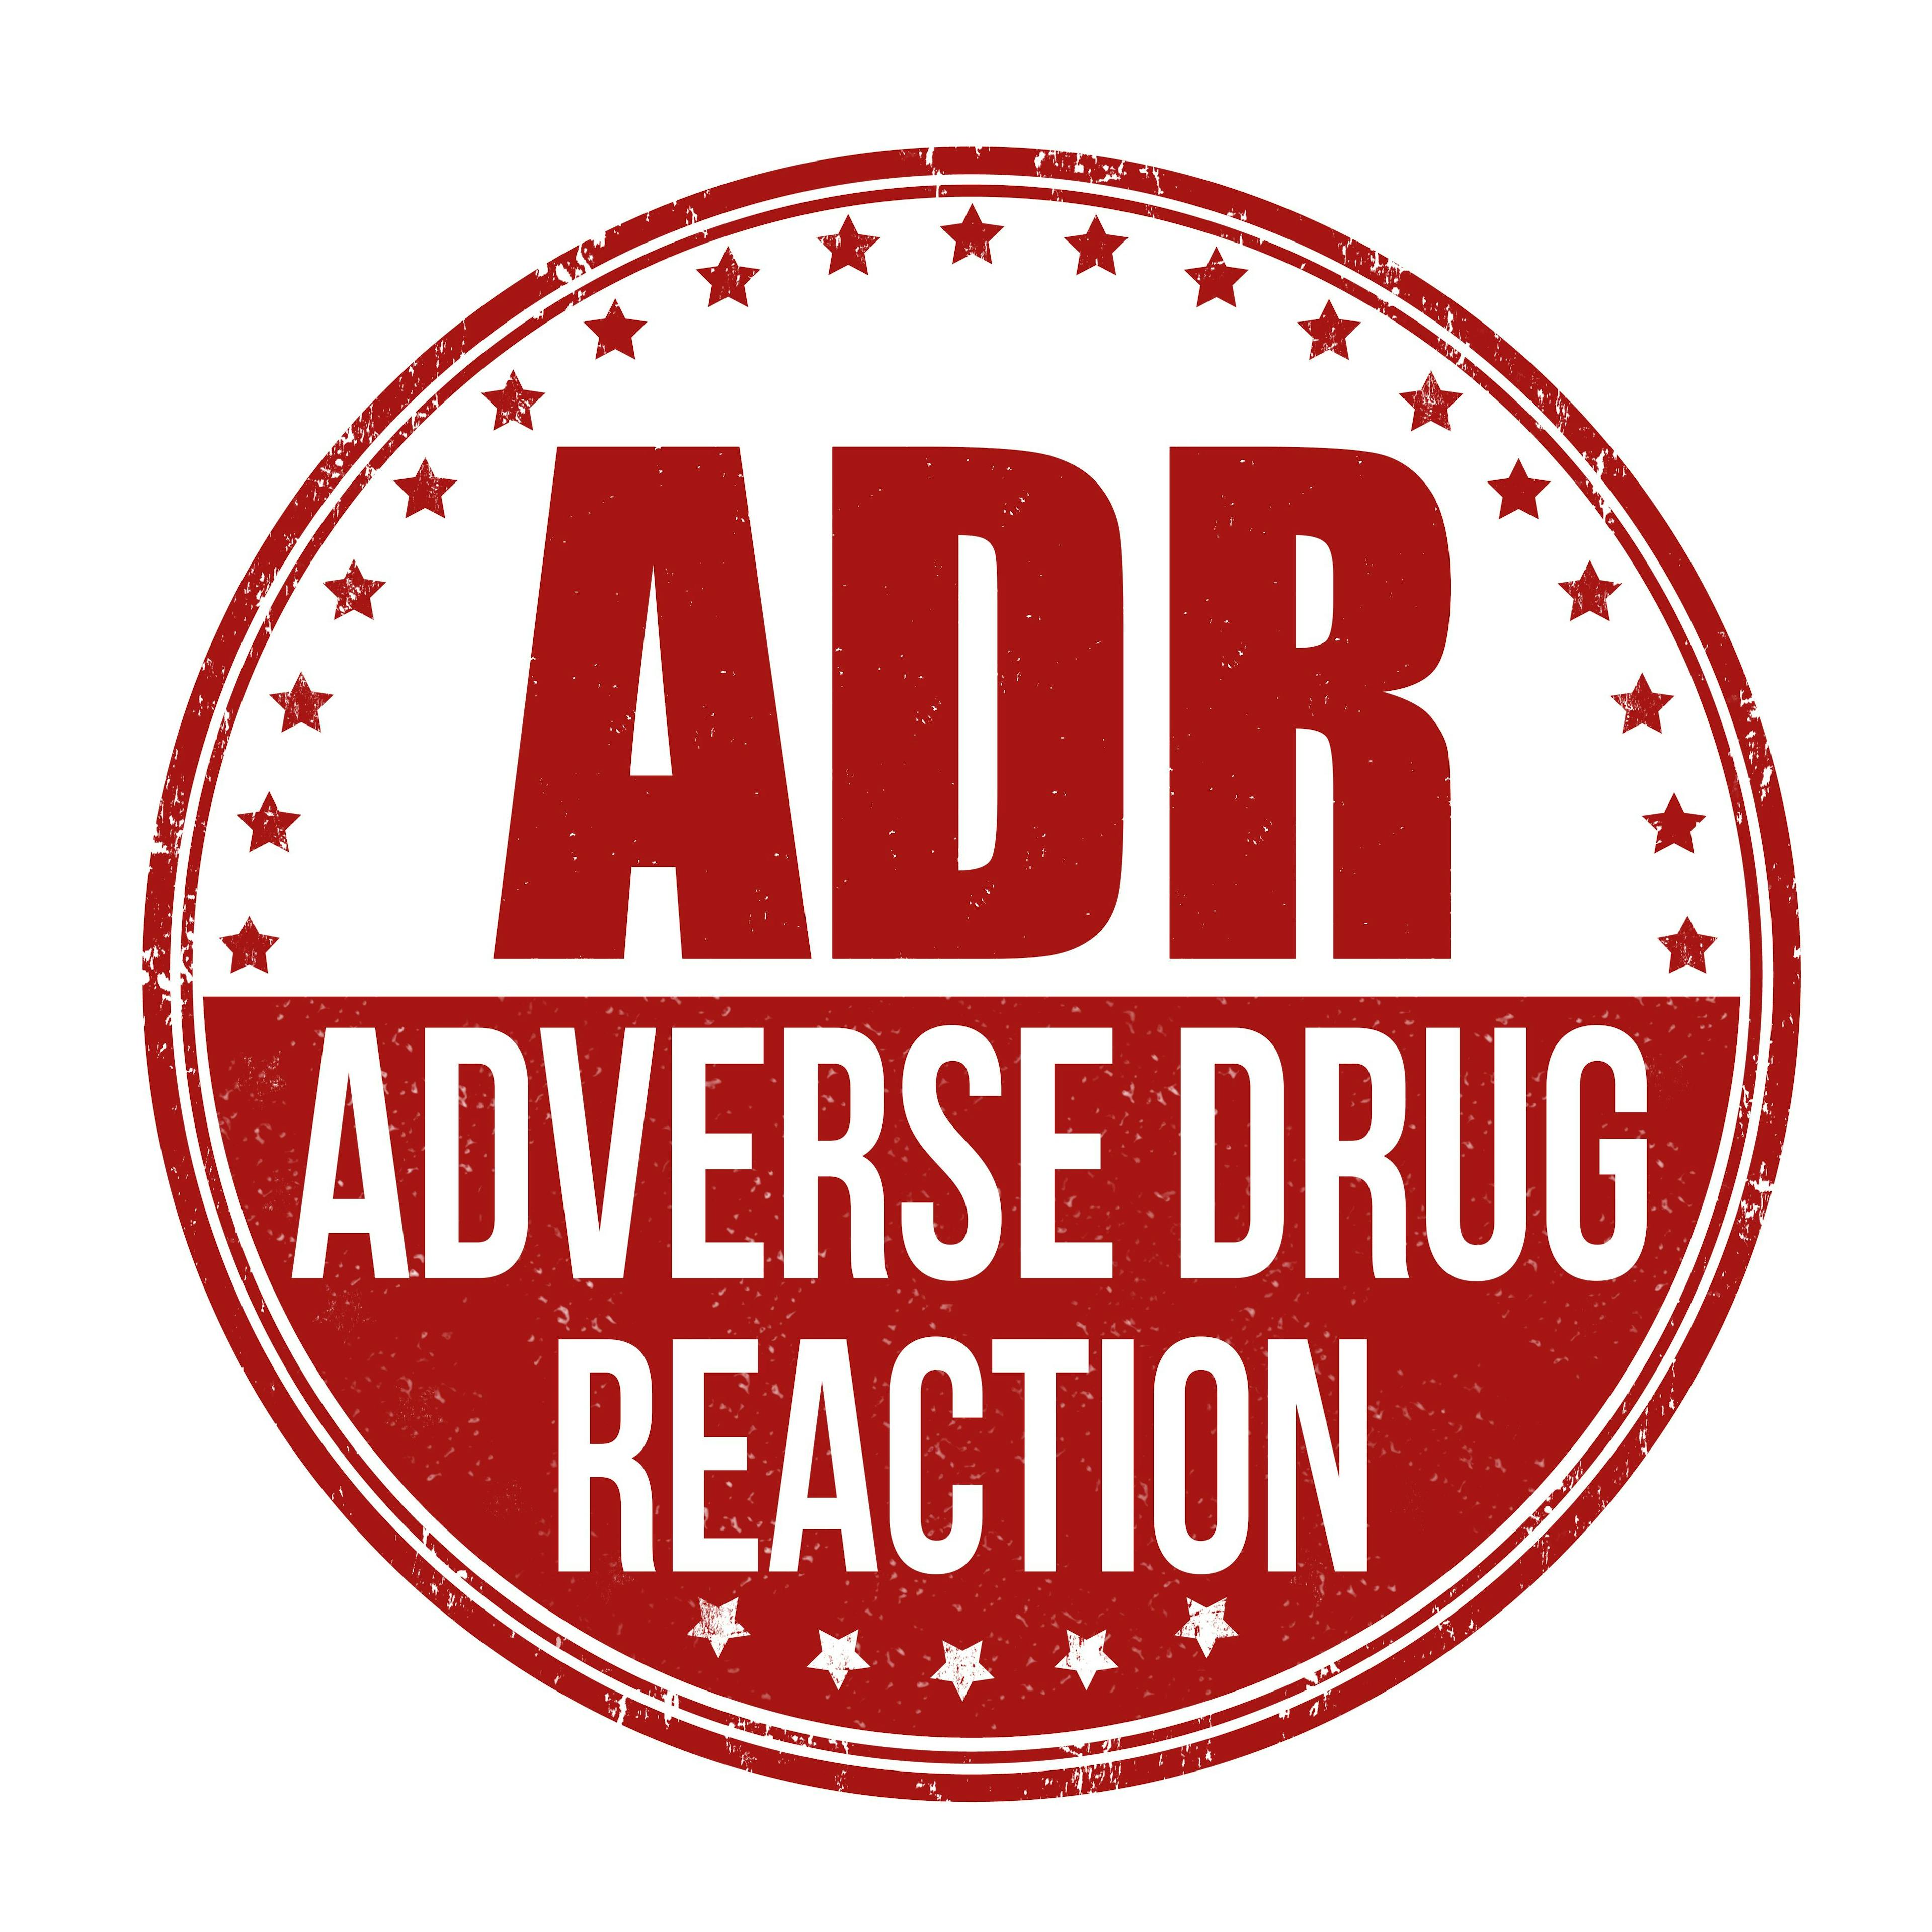 Adverse Drug Reaction Warning | image credit: Balint Radu - stock.adobe.com